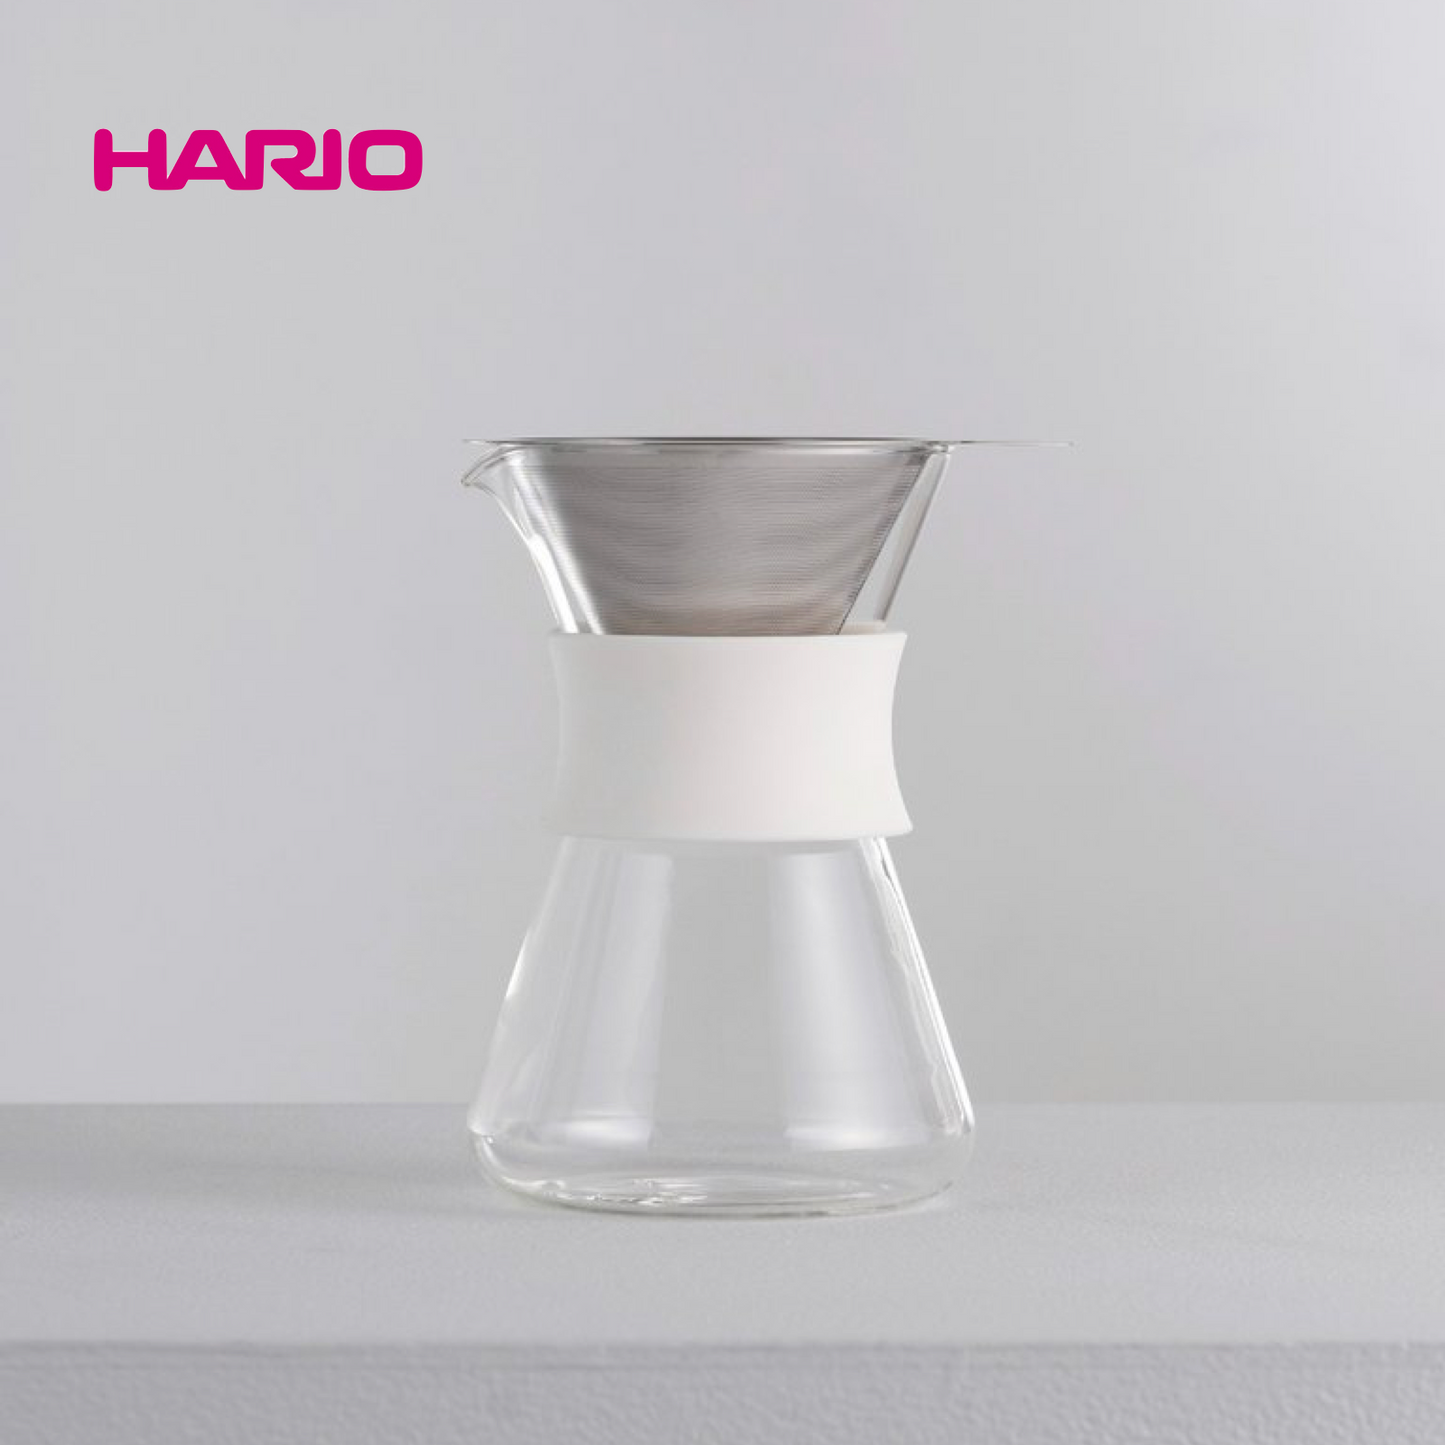 hario glass coffee maker